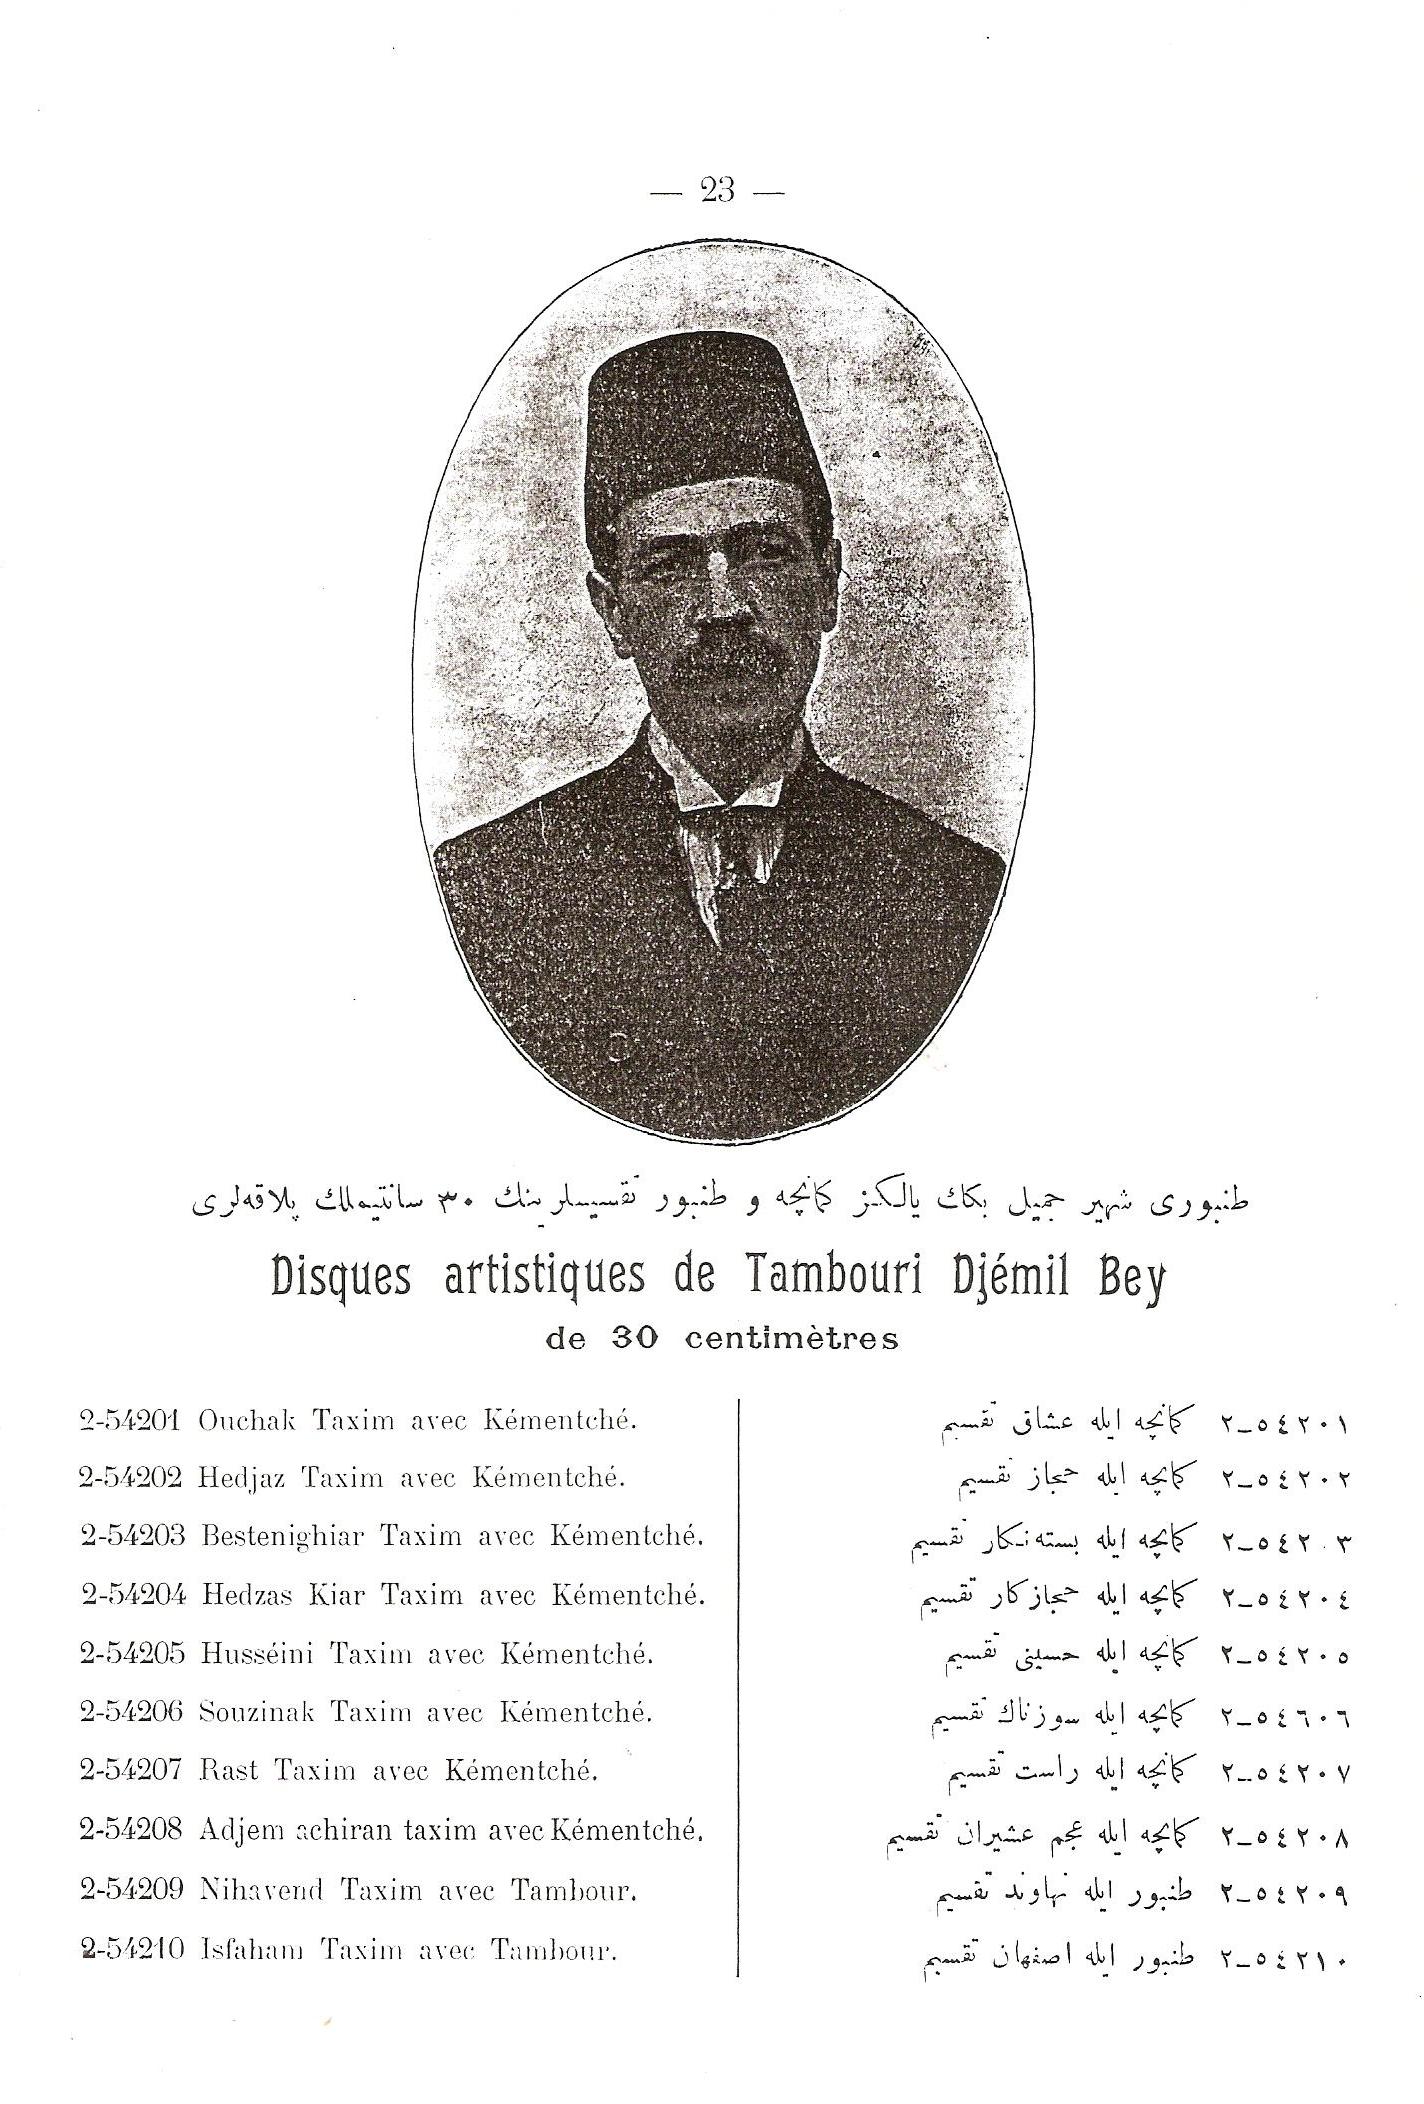 TCB 1905 FAVORITE catalogue 2